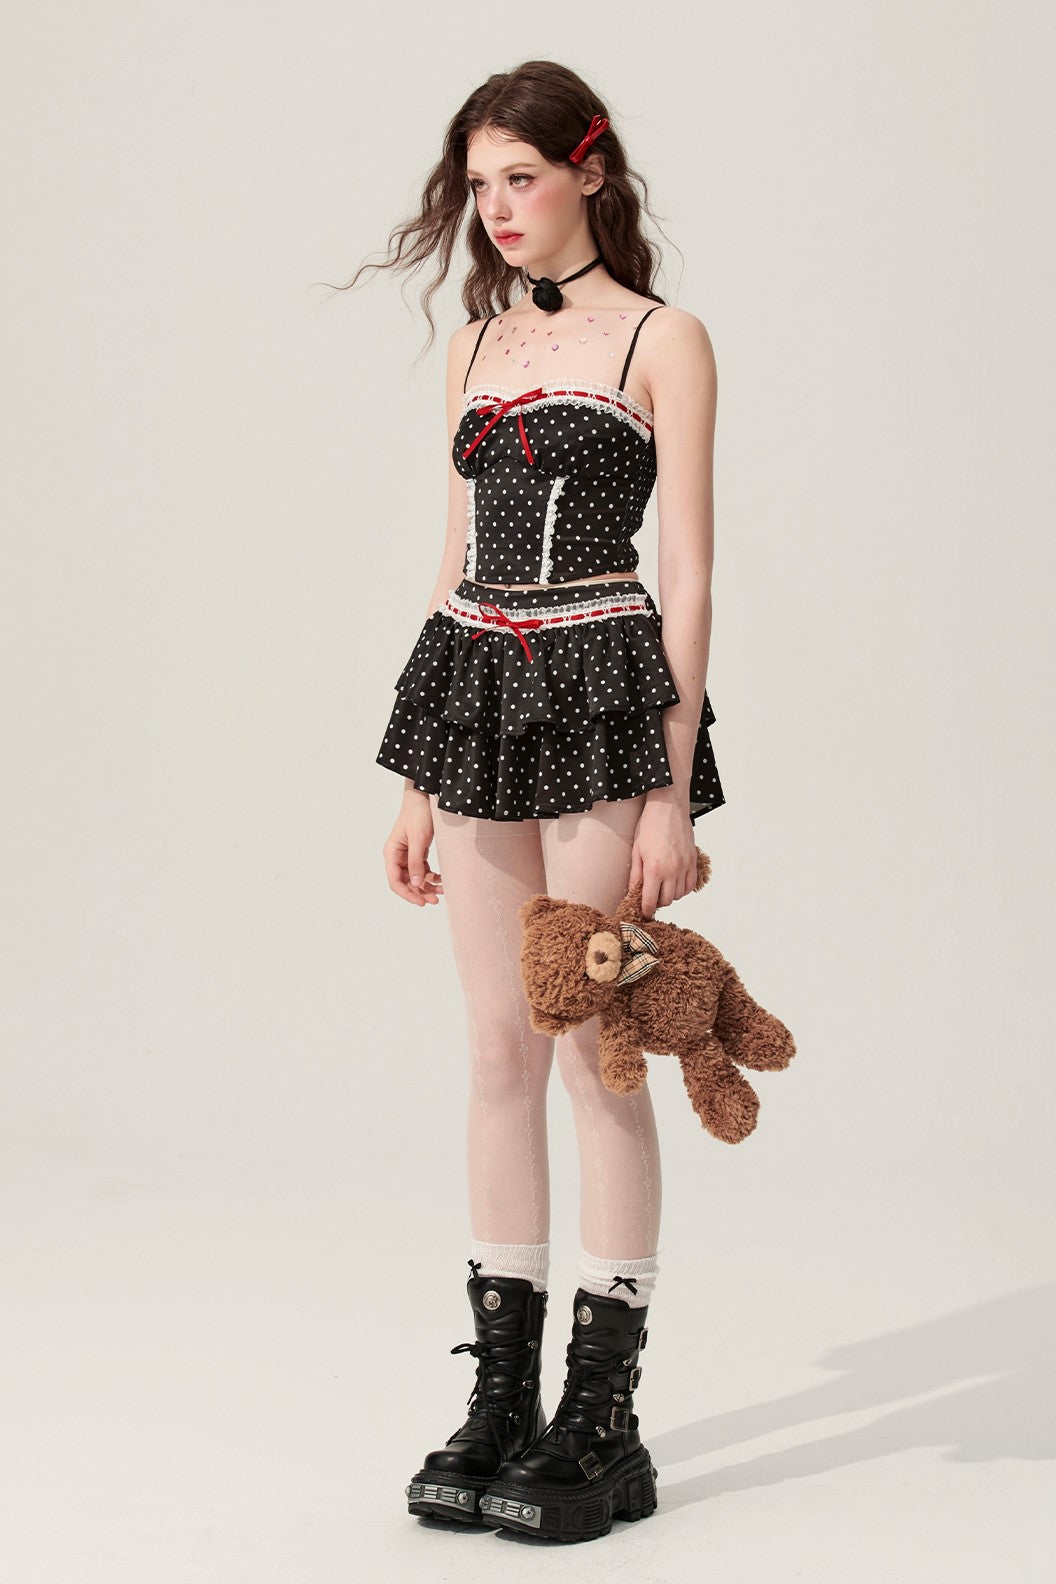 Black Polka Dot Suspender Top/A-line Slimming Short Skirt DIA0171